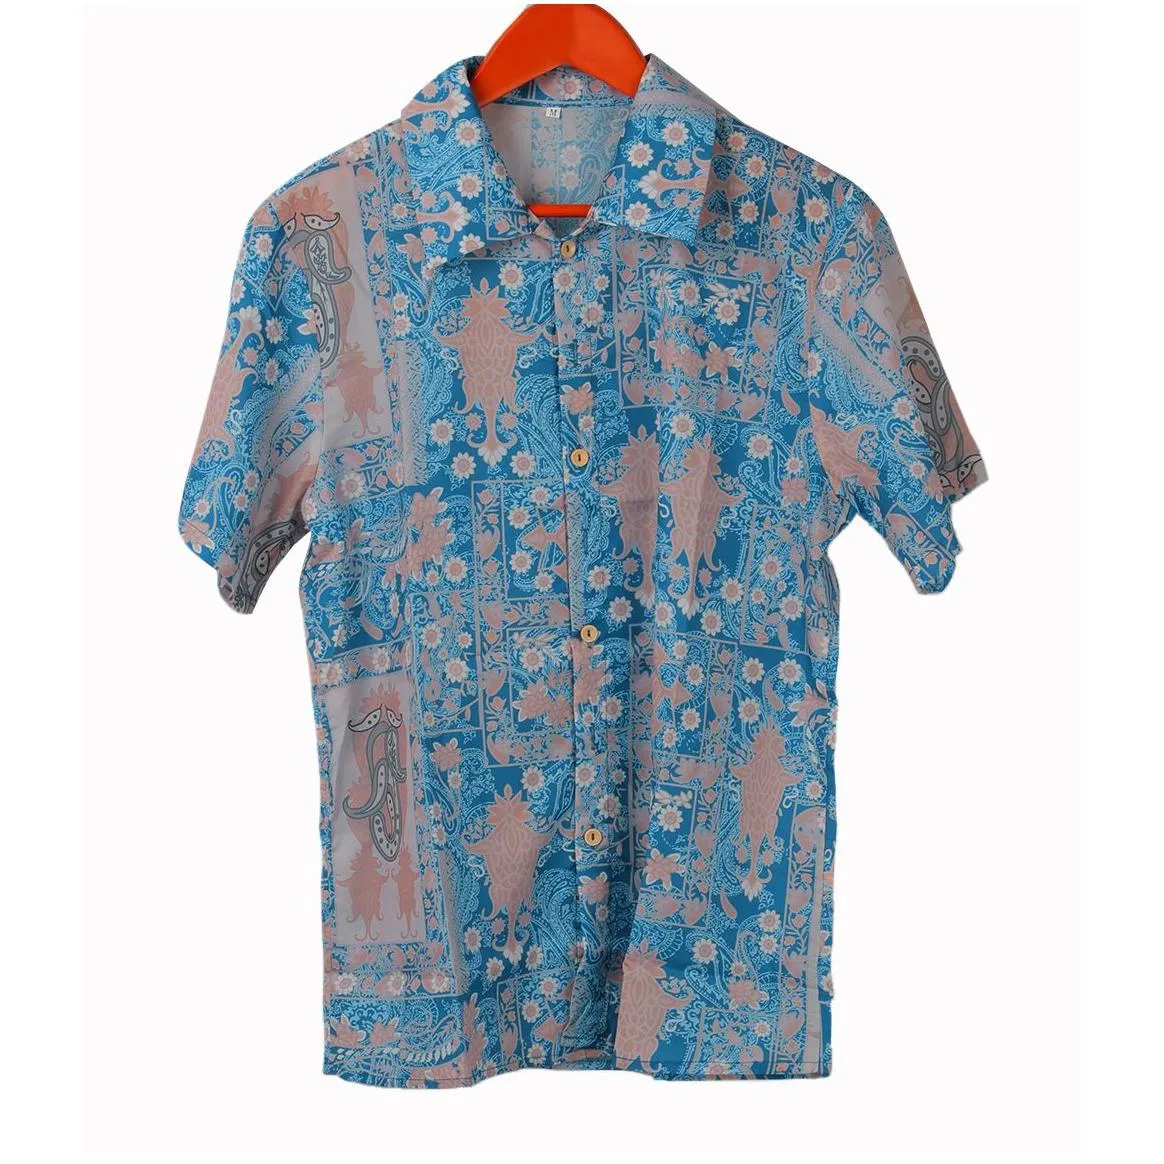 mens shirts fashion casual summer hawaii casual beach short sleeve printing shirt short sleeve shirts s-xxl